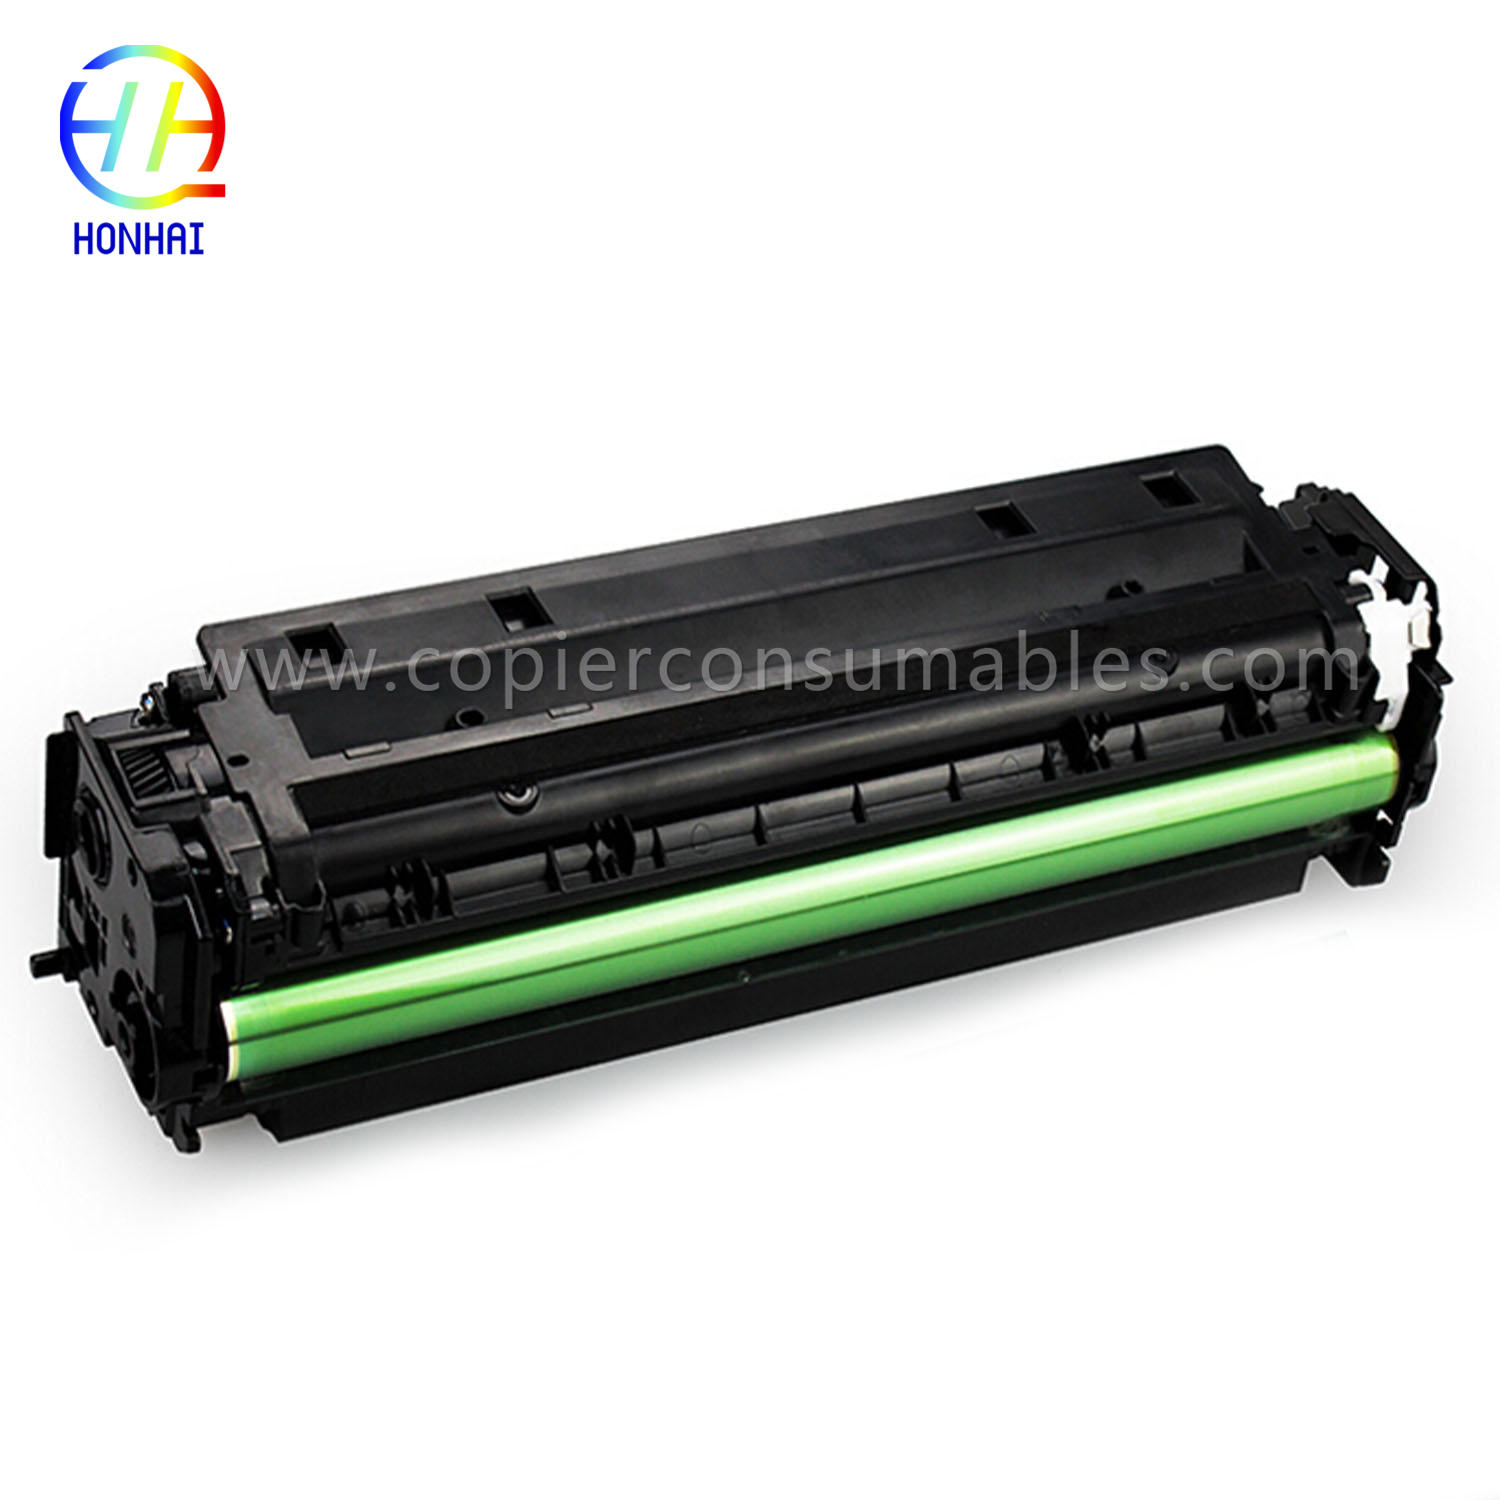 Toner Cartridge for HP Laserjet PRO 400 Color Mfp M451nw M451DN M451dw PRO 300 Color Mfp M375nw (CE410A)